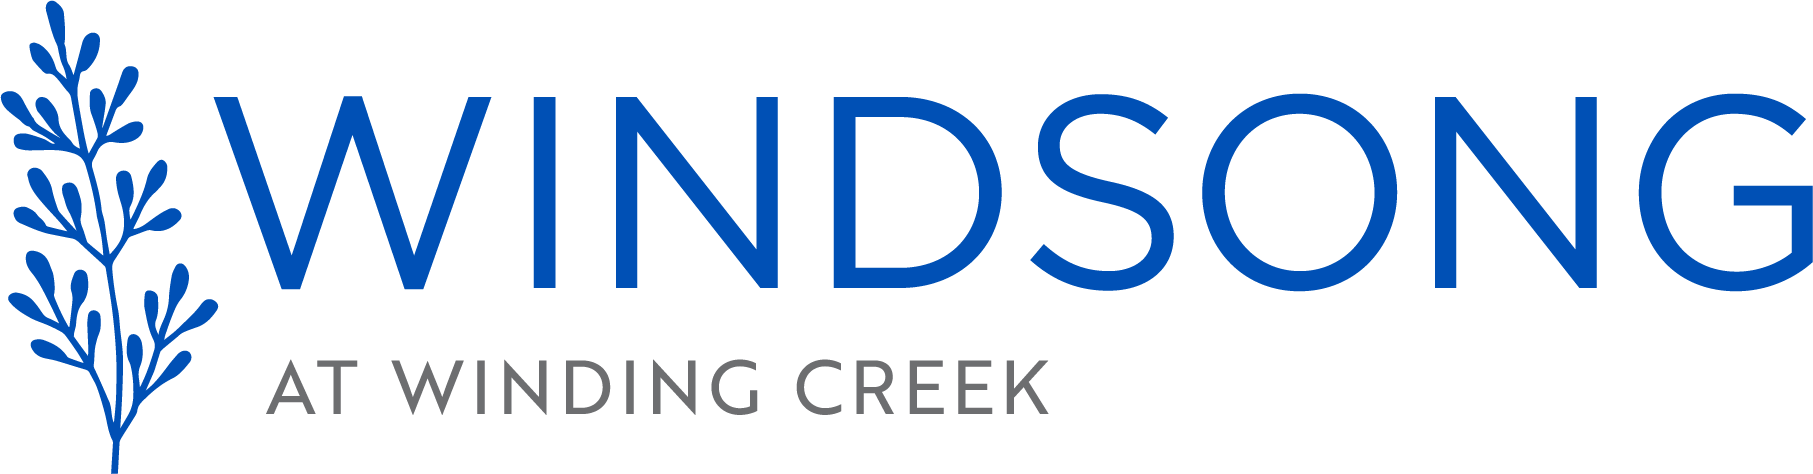 windsong-at-winding-creek-logo